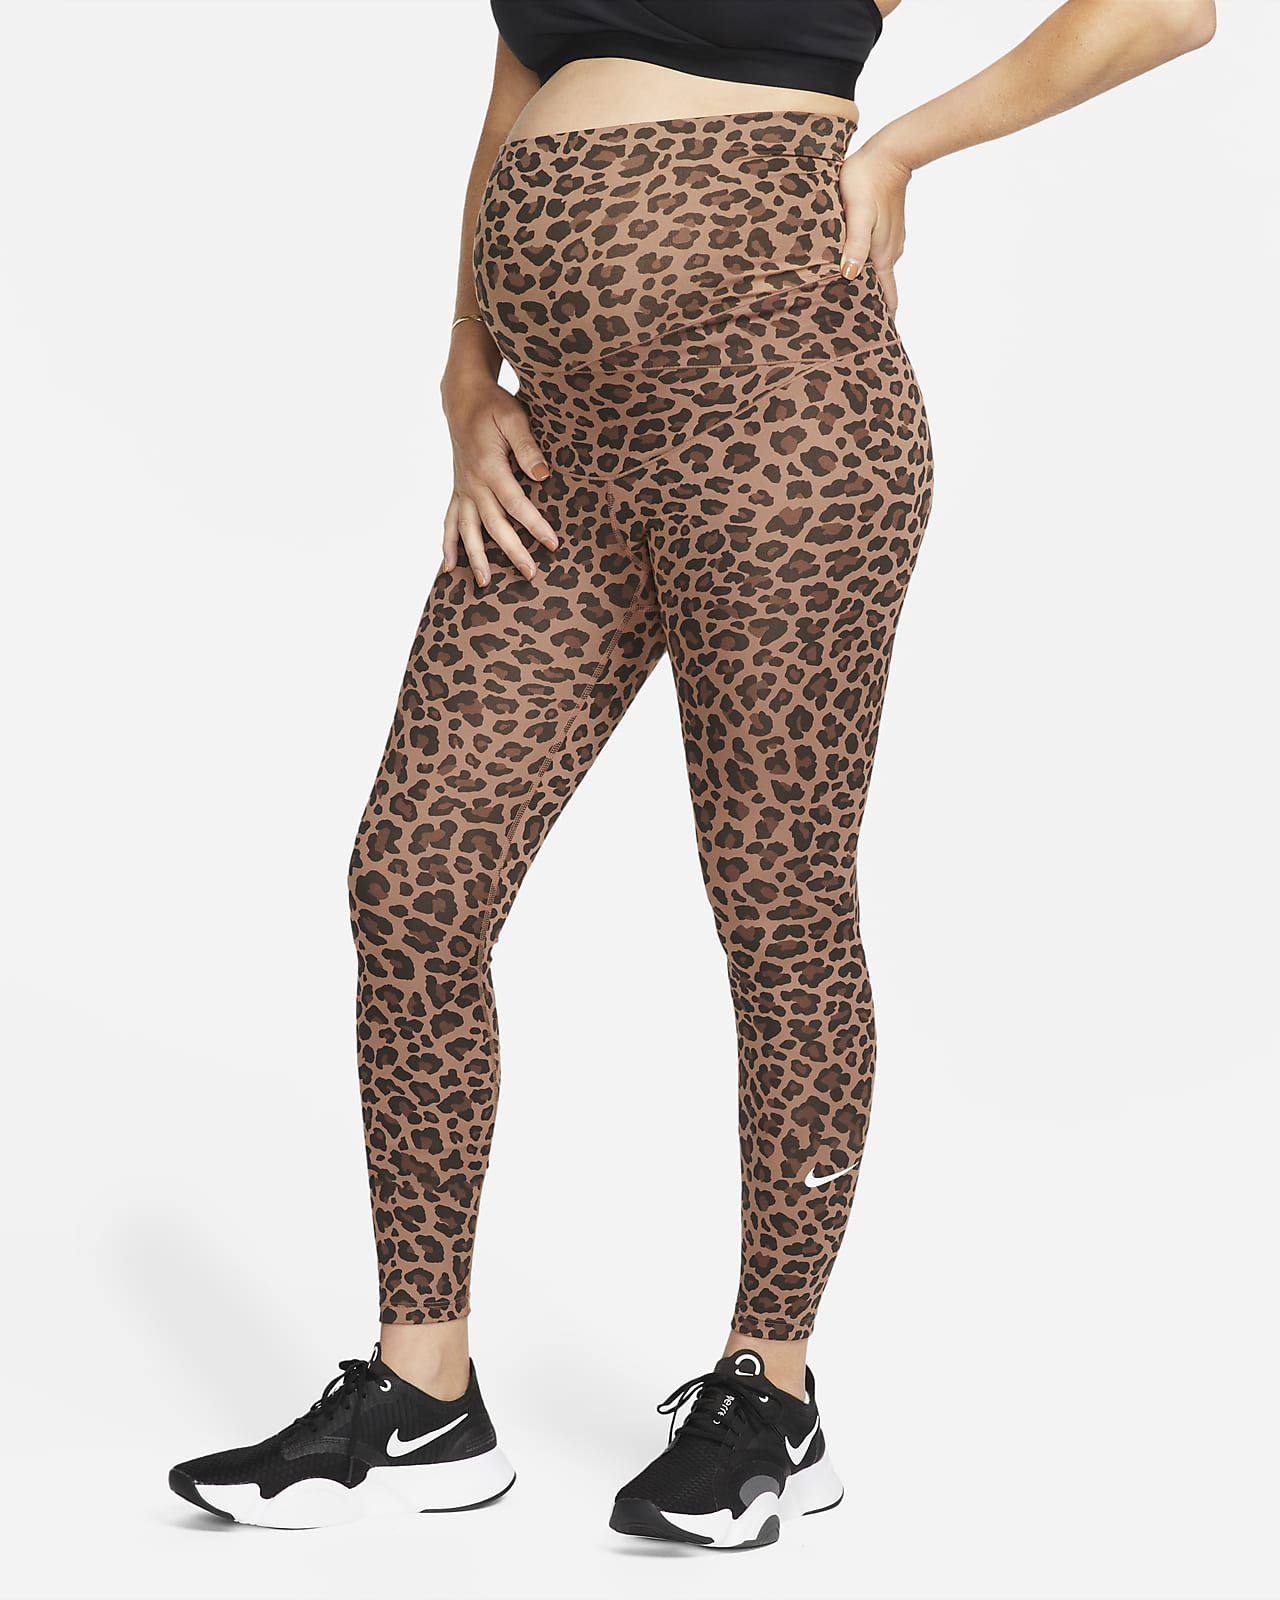 Nike One (M) Leggings de talle alto estampado leopardo - Mujer Nike ES